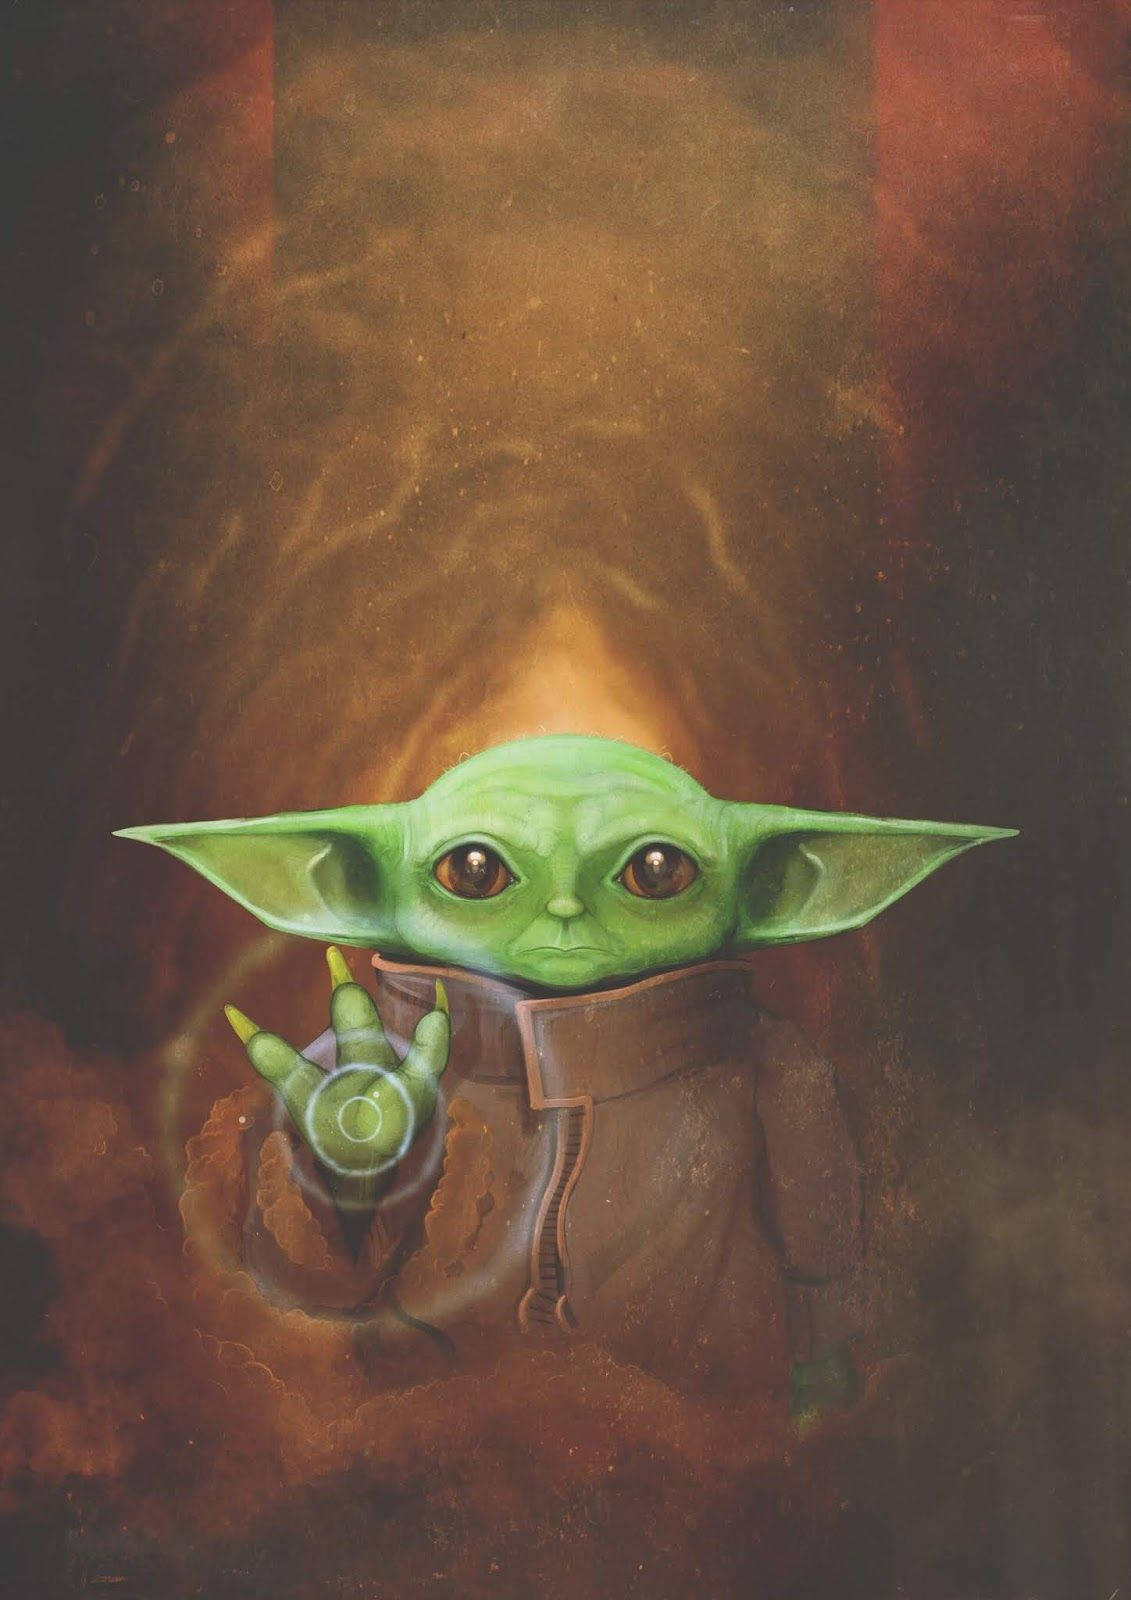  Baby Yoda Hintergrundbild 1131x1600. Free Baby Yoda Wallpaper Downloads, Baby Yoda Wallpaper for FREE